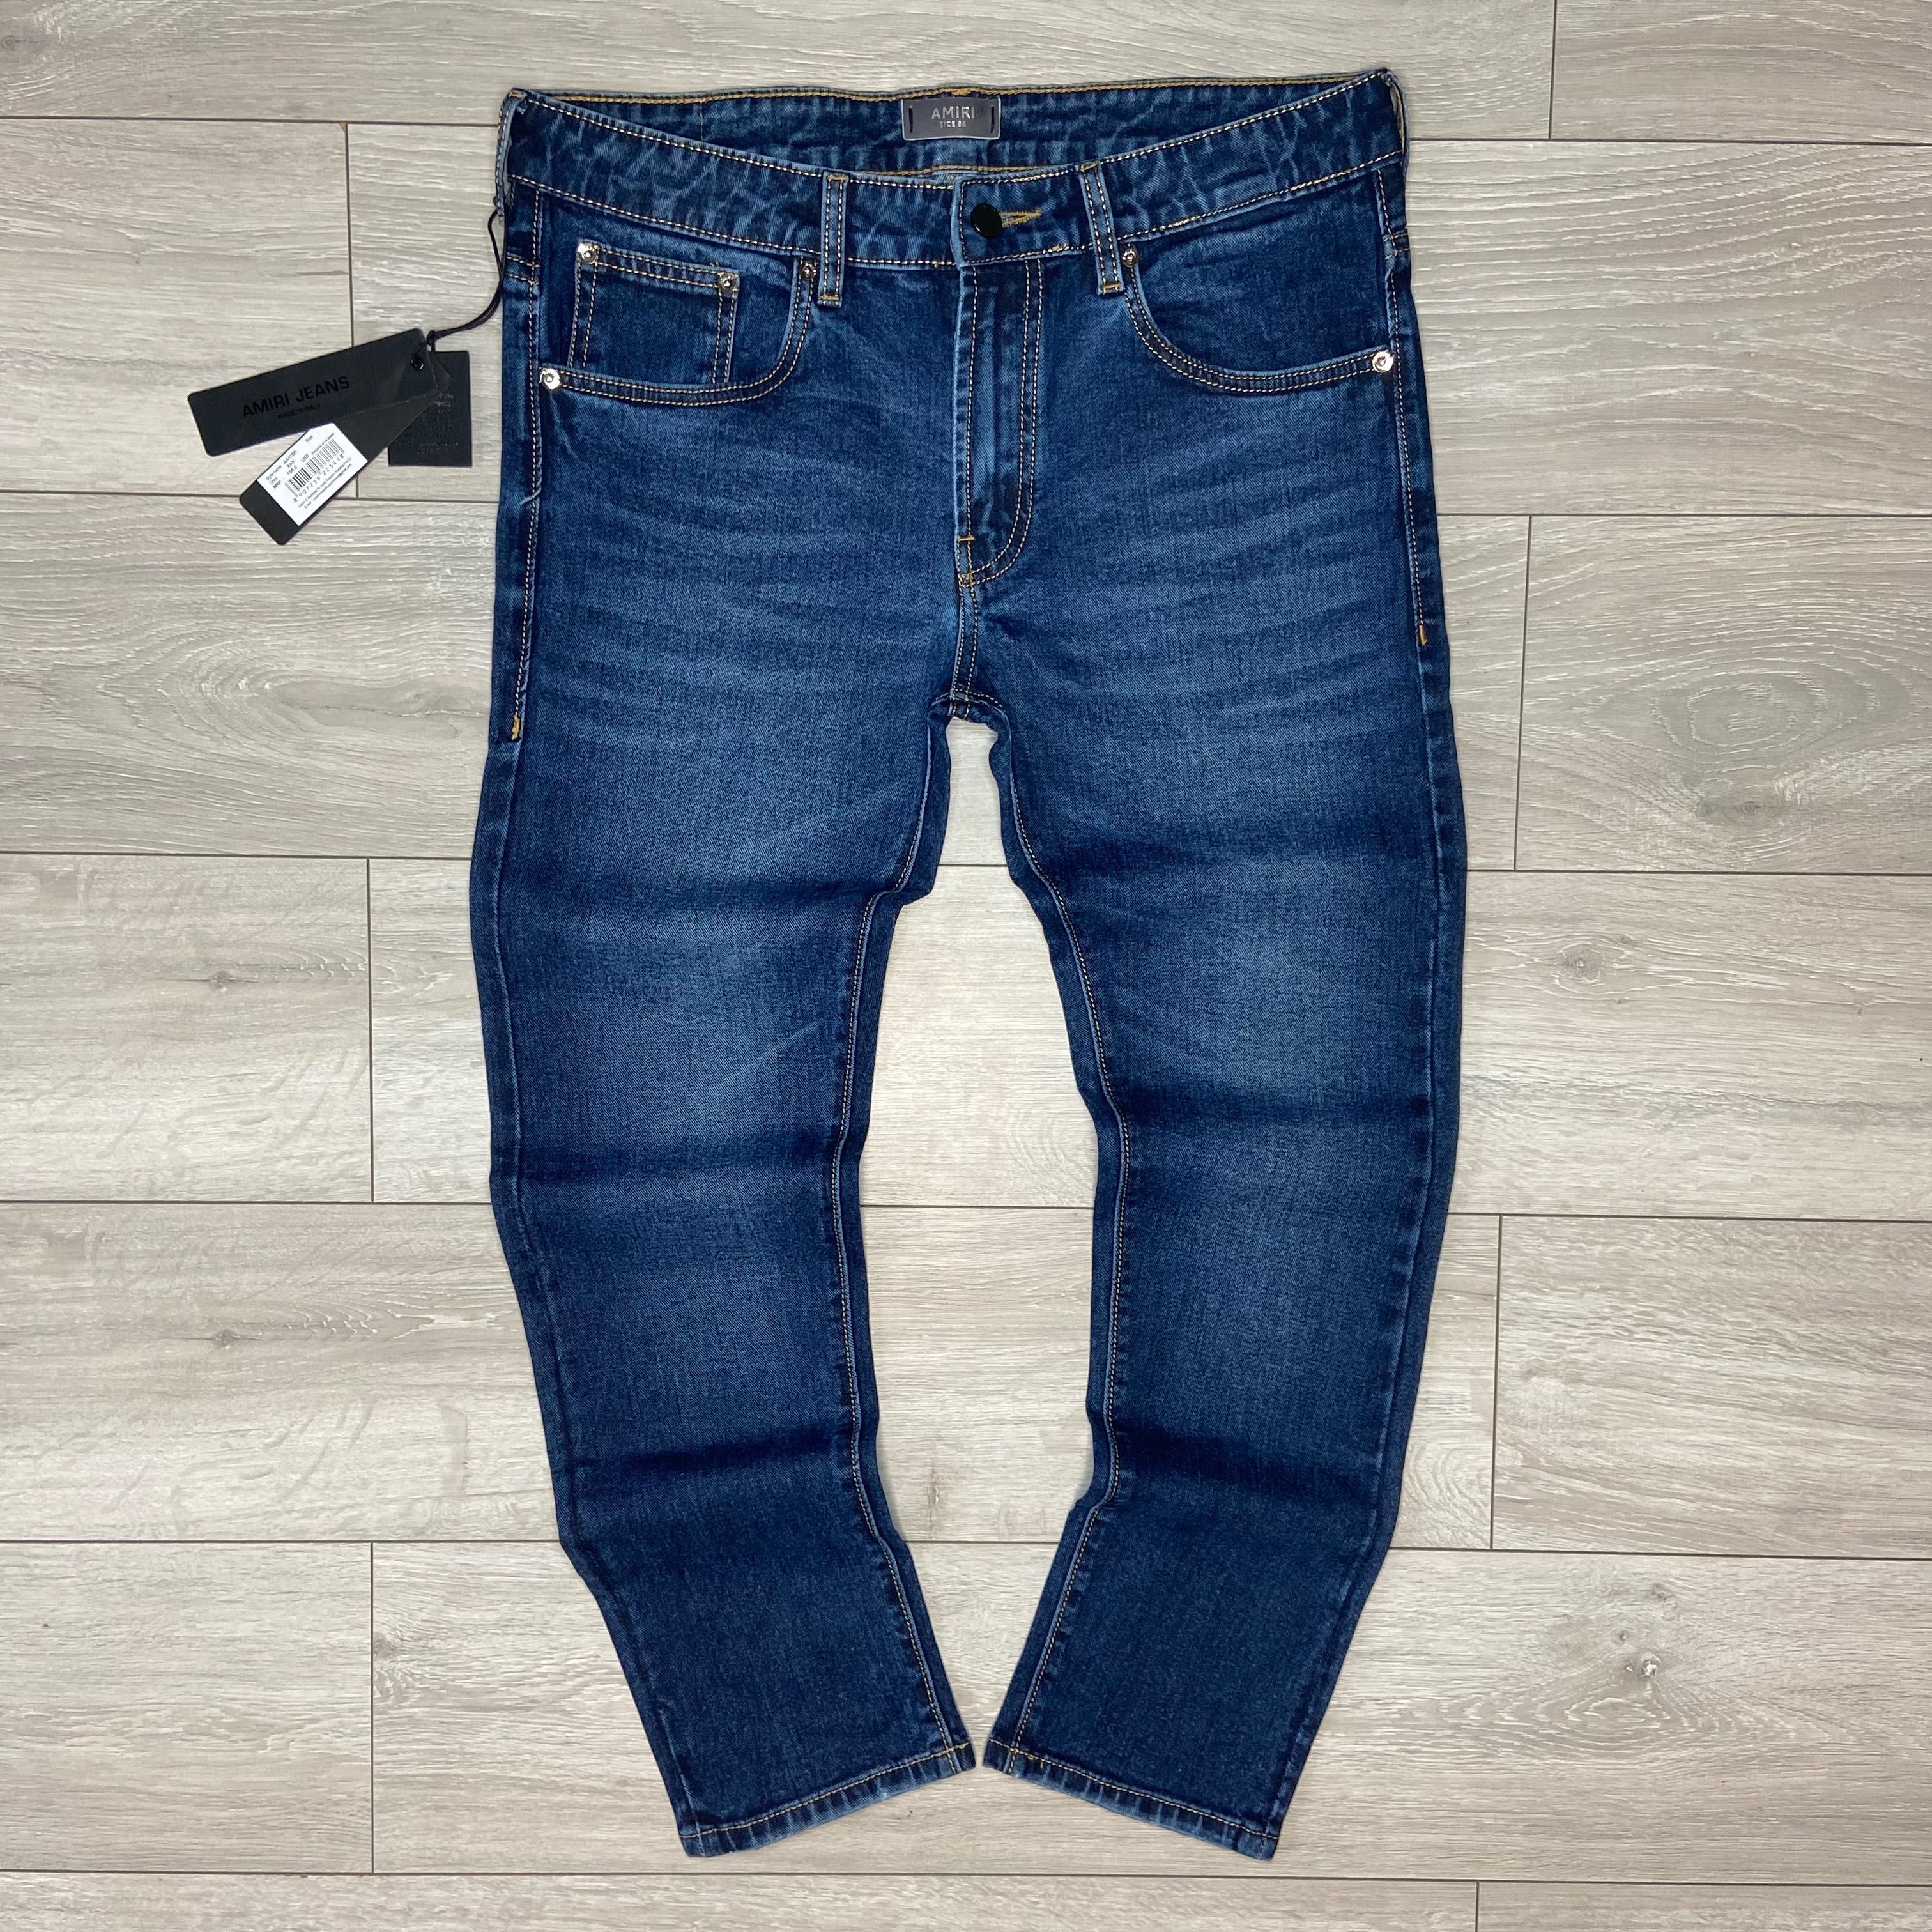 Новые джинсы AMIRI Denim Jeans S-M мужские штаны